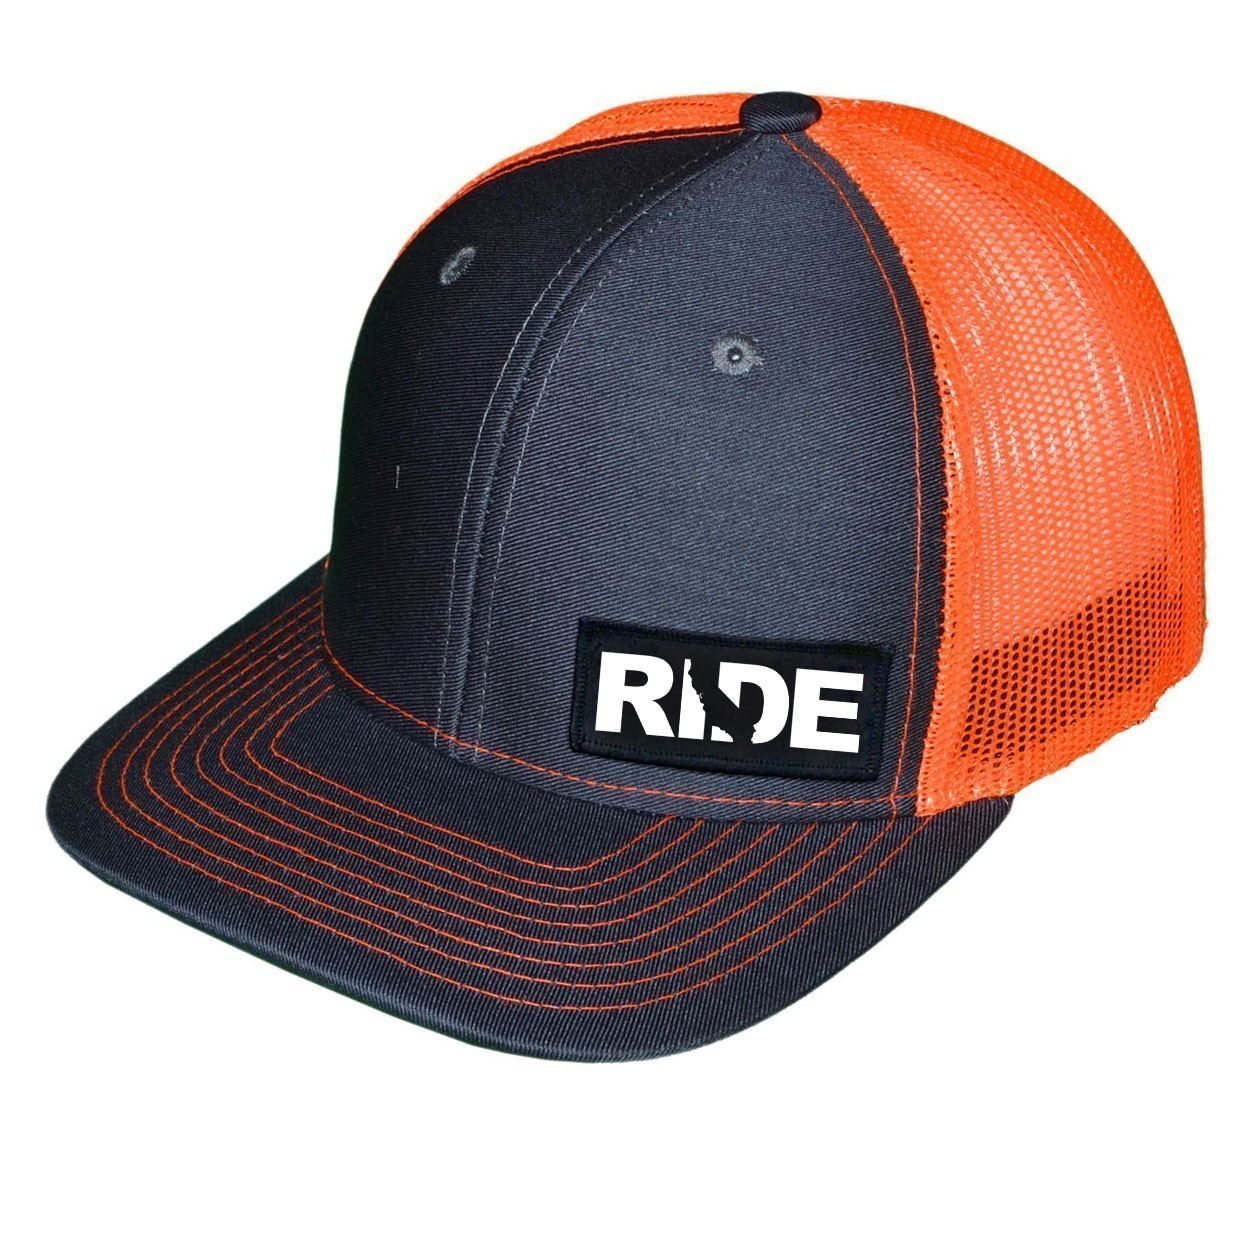 Ride California Night Out Woven Patch Snapback Trucker Hat Dark Gray/Orange (White Logo)